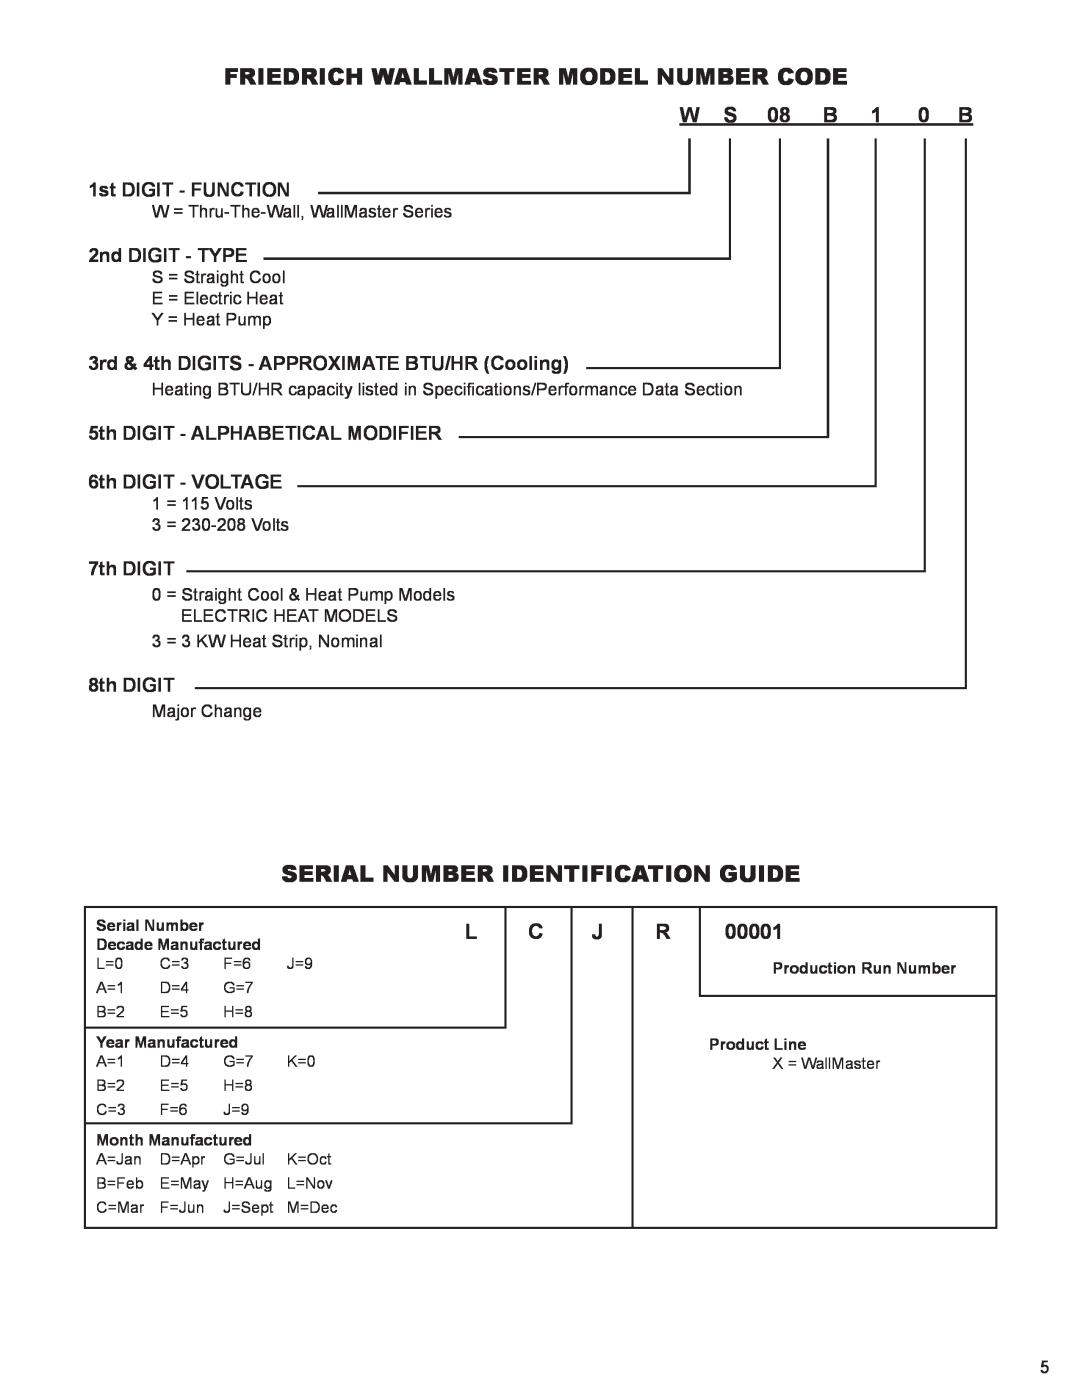 Friedrich 2009, 2008 FRIEDRICH wallmaster MODEL NUMBER CODE, Serial Number Identification Guide, W S 08 B 1 0 B, 00001 